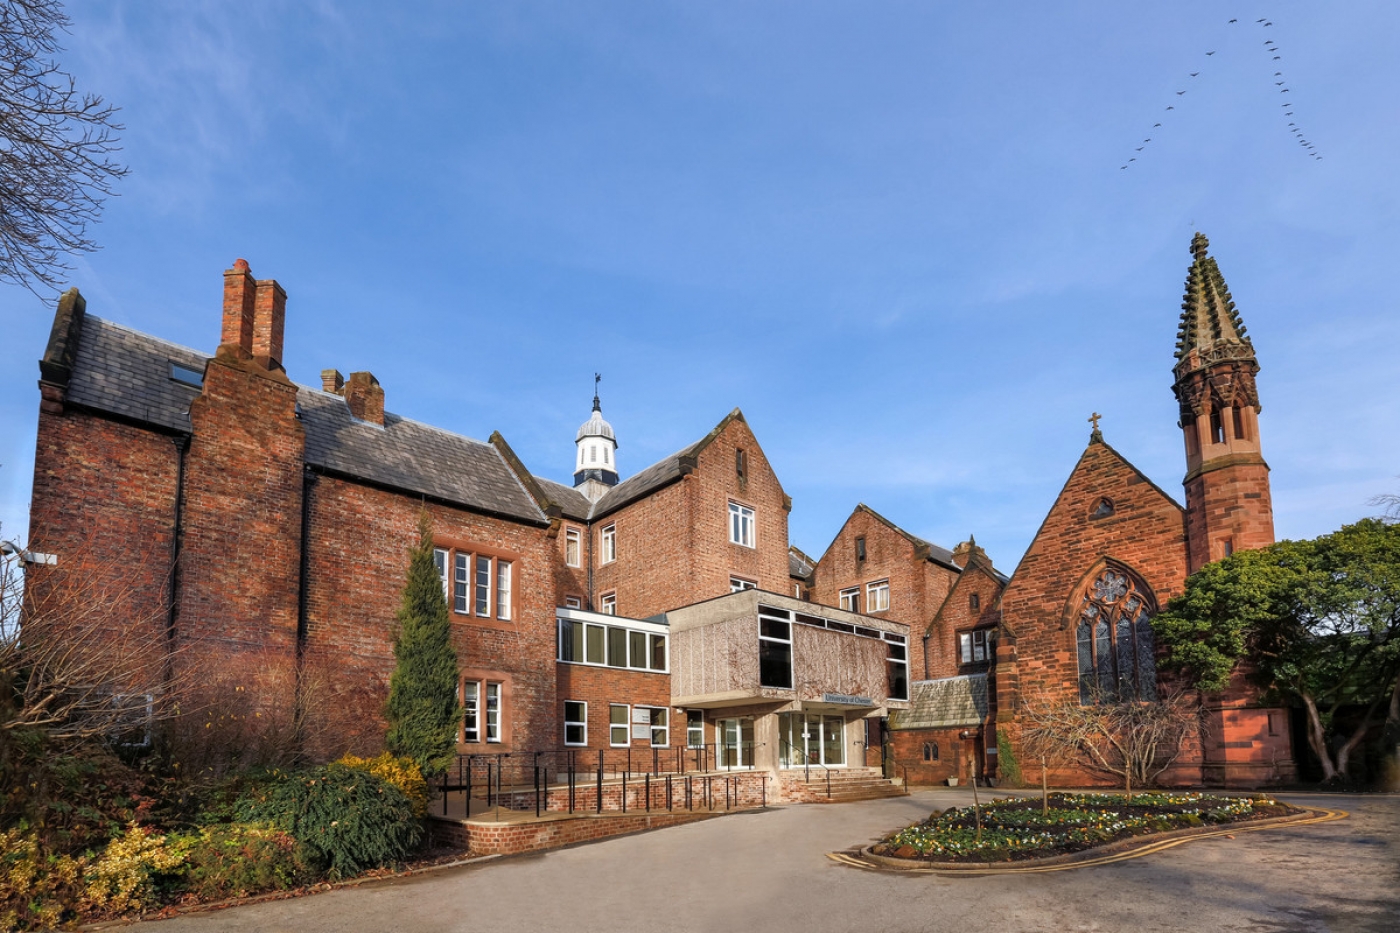 University of Chester - University Centre Shrewsbury